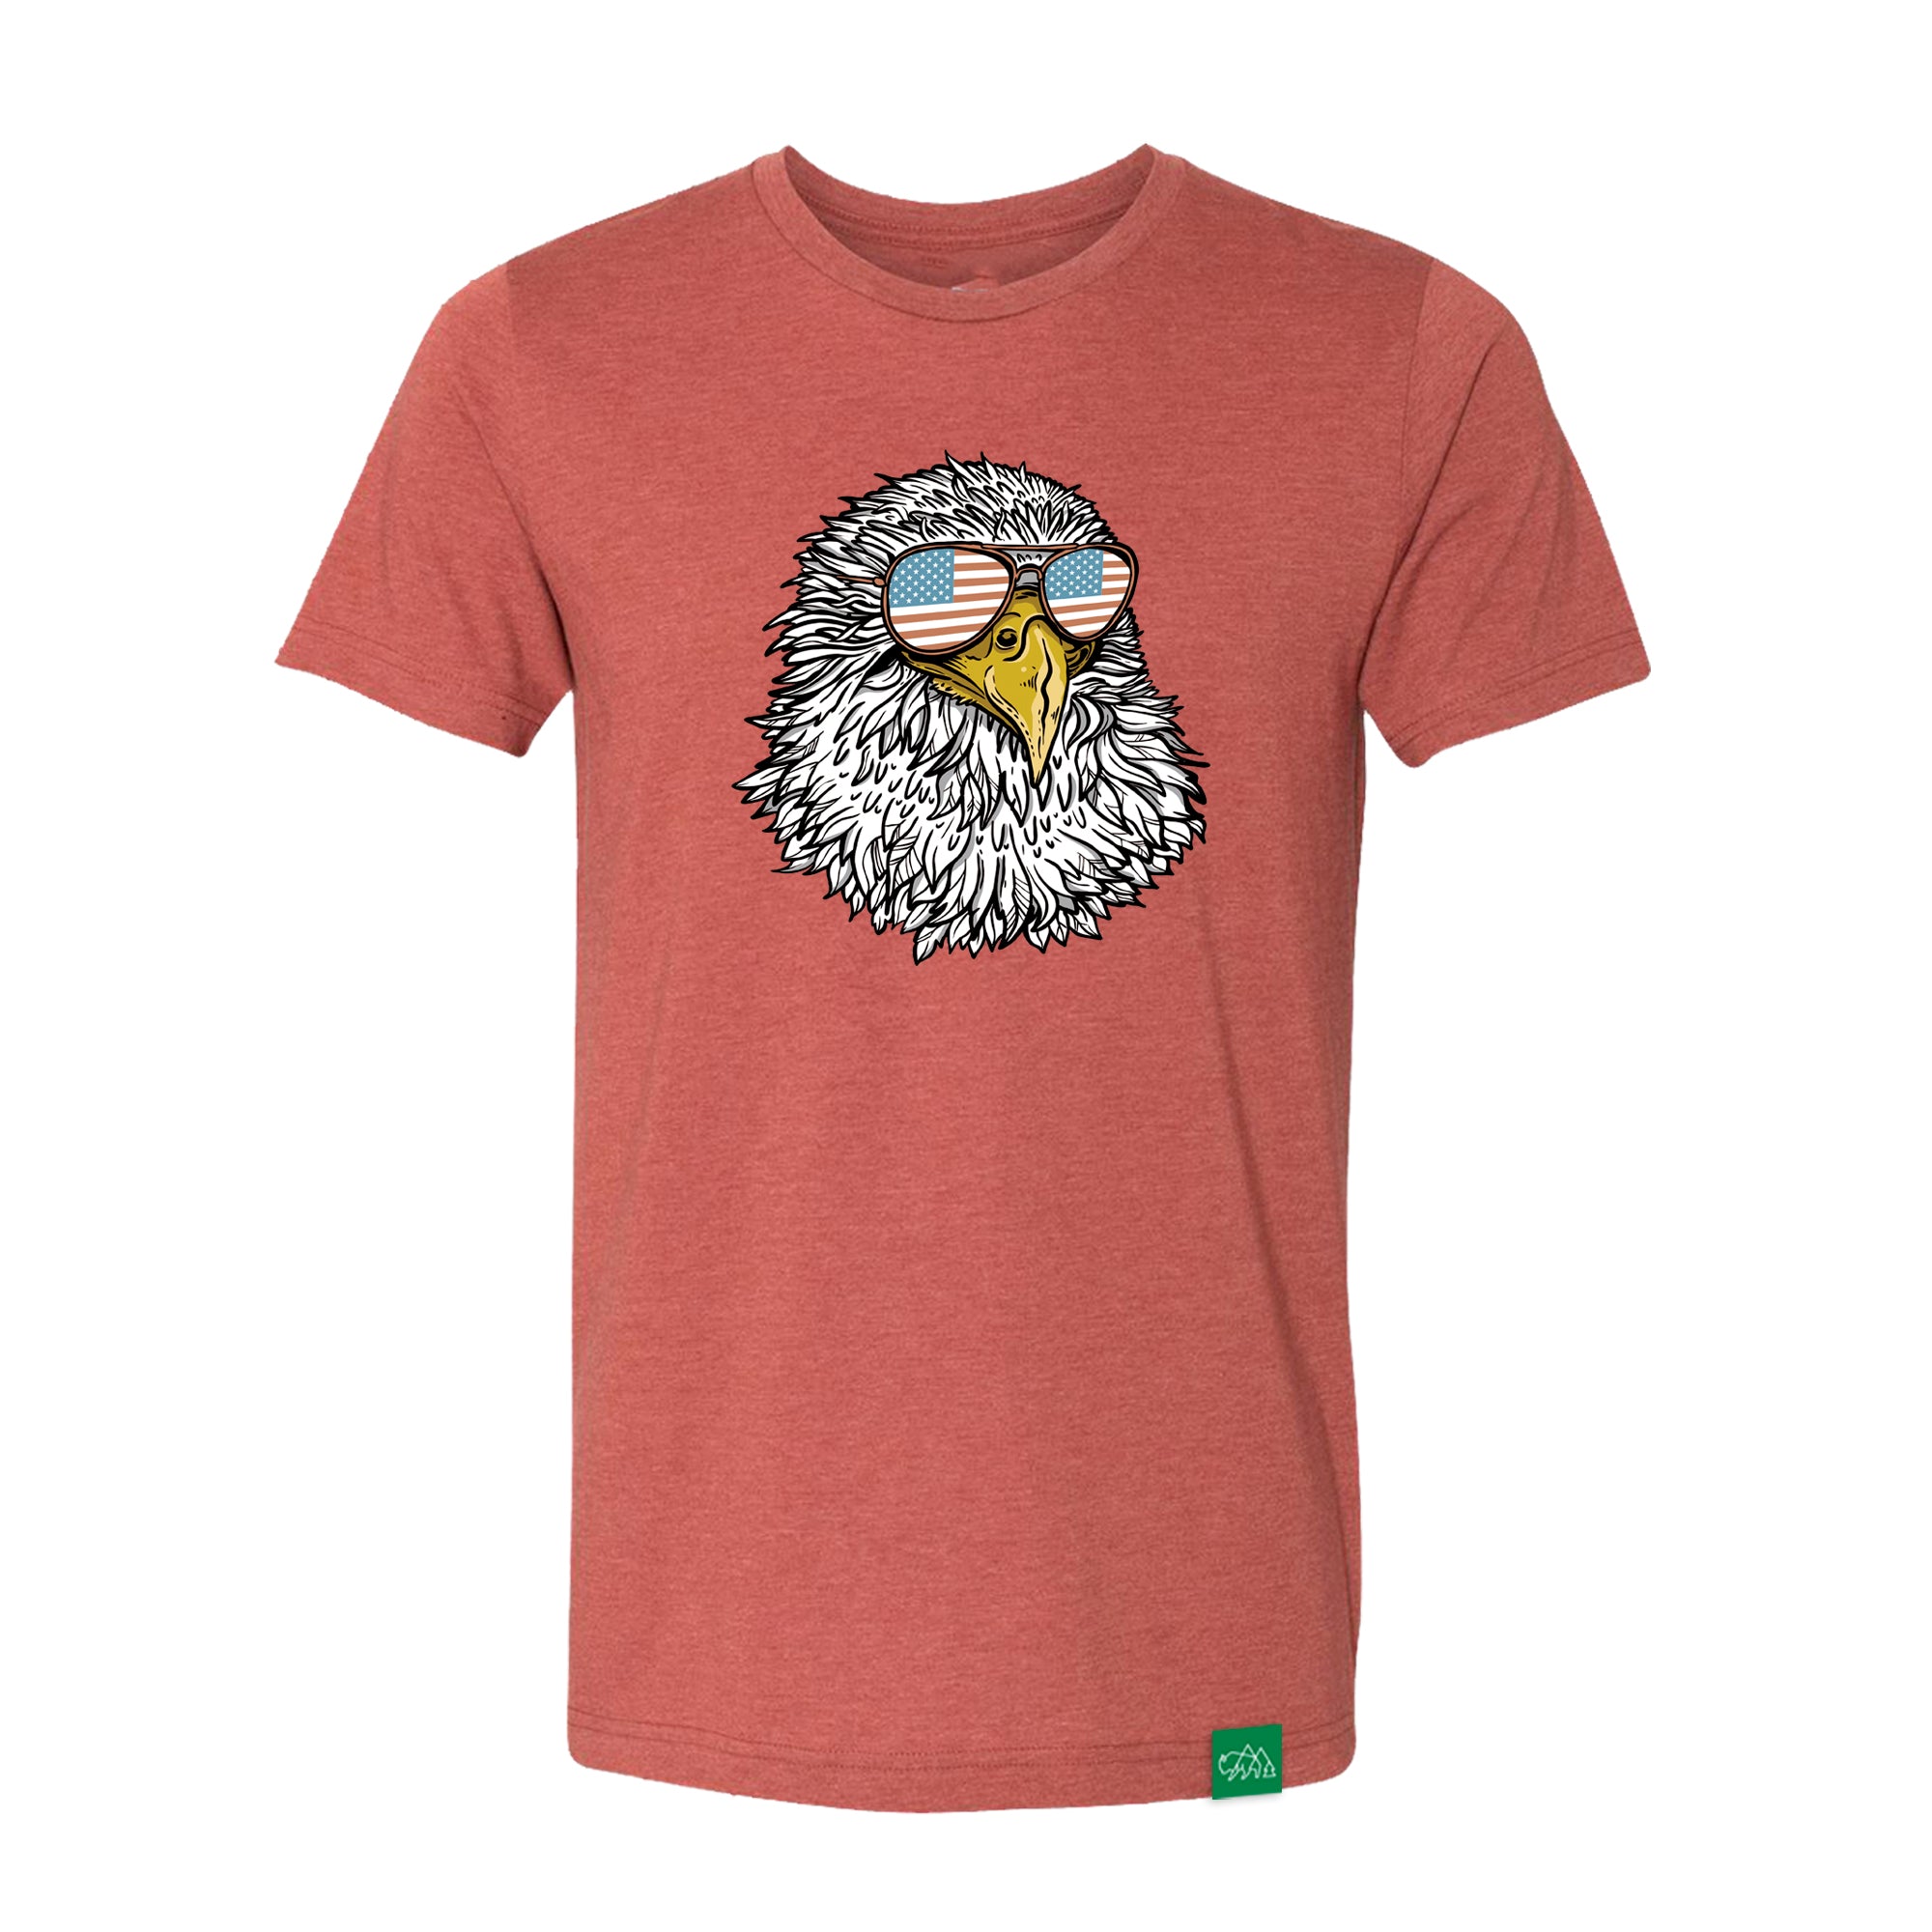 The Patriot T-Shirt